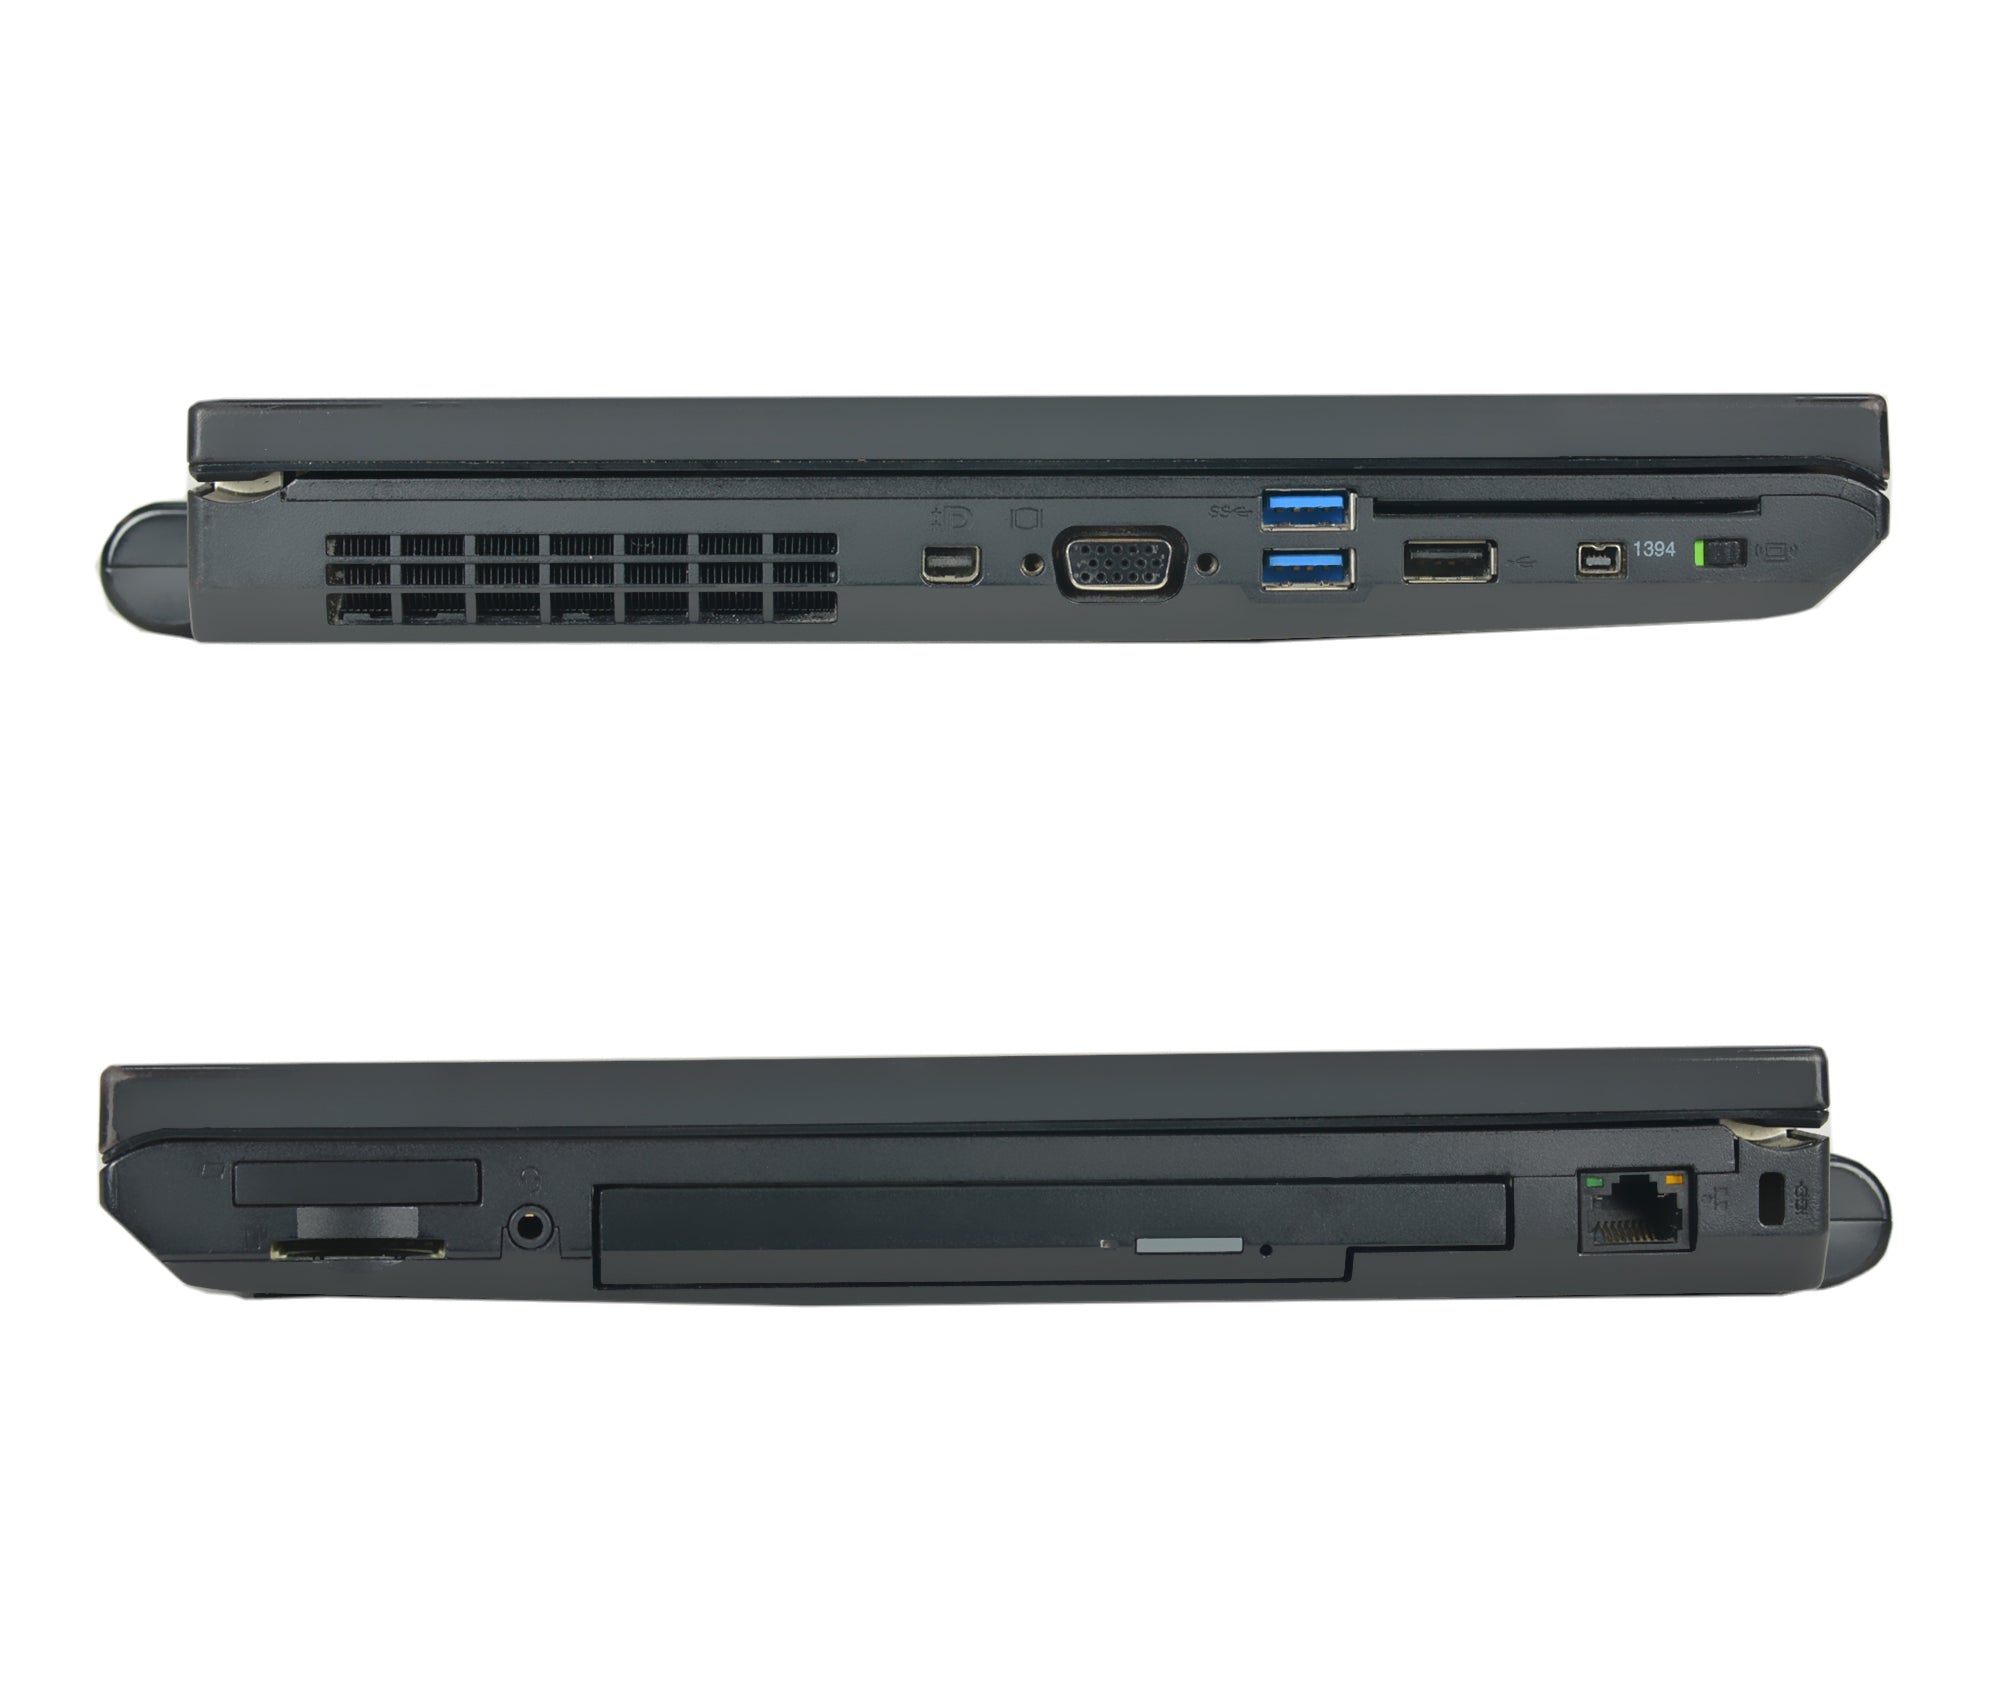 Lenovo W530 Laptop, 15.6” HD, i7-3740QM, 256GB SSD, Refurbished – Systems PC